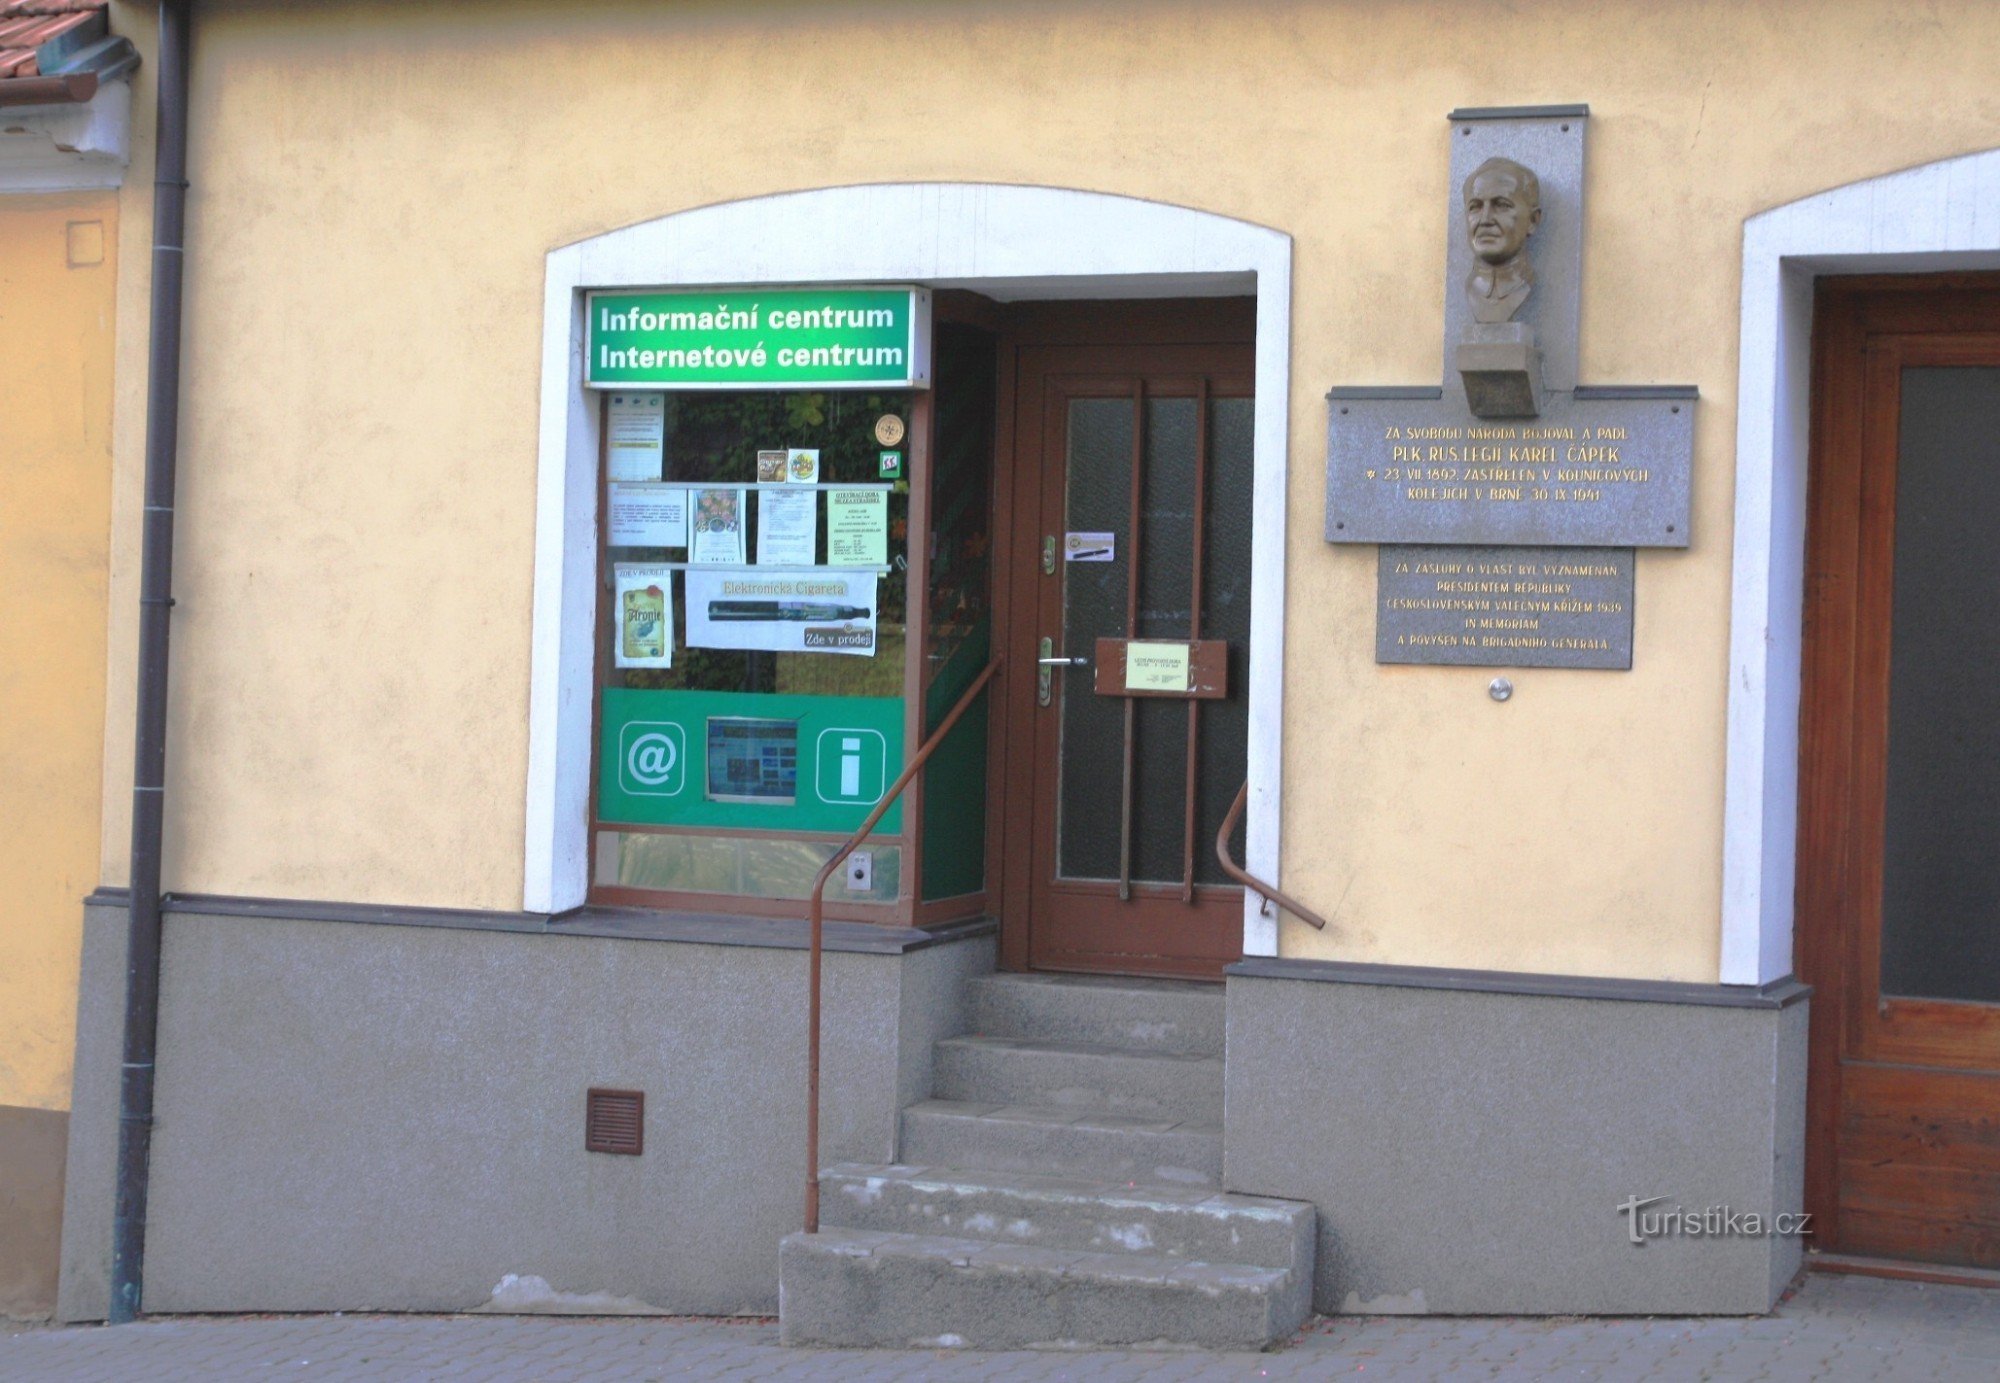 Olešnice - centrum informacyjne